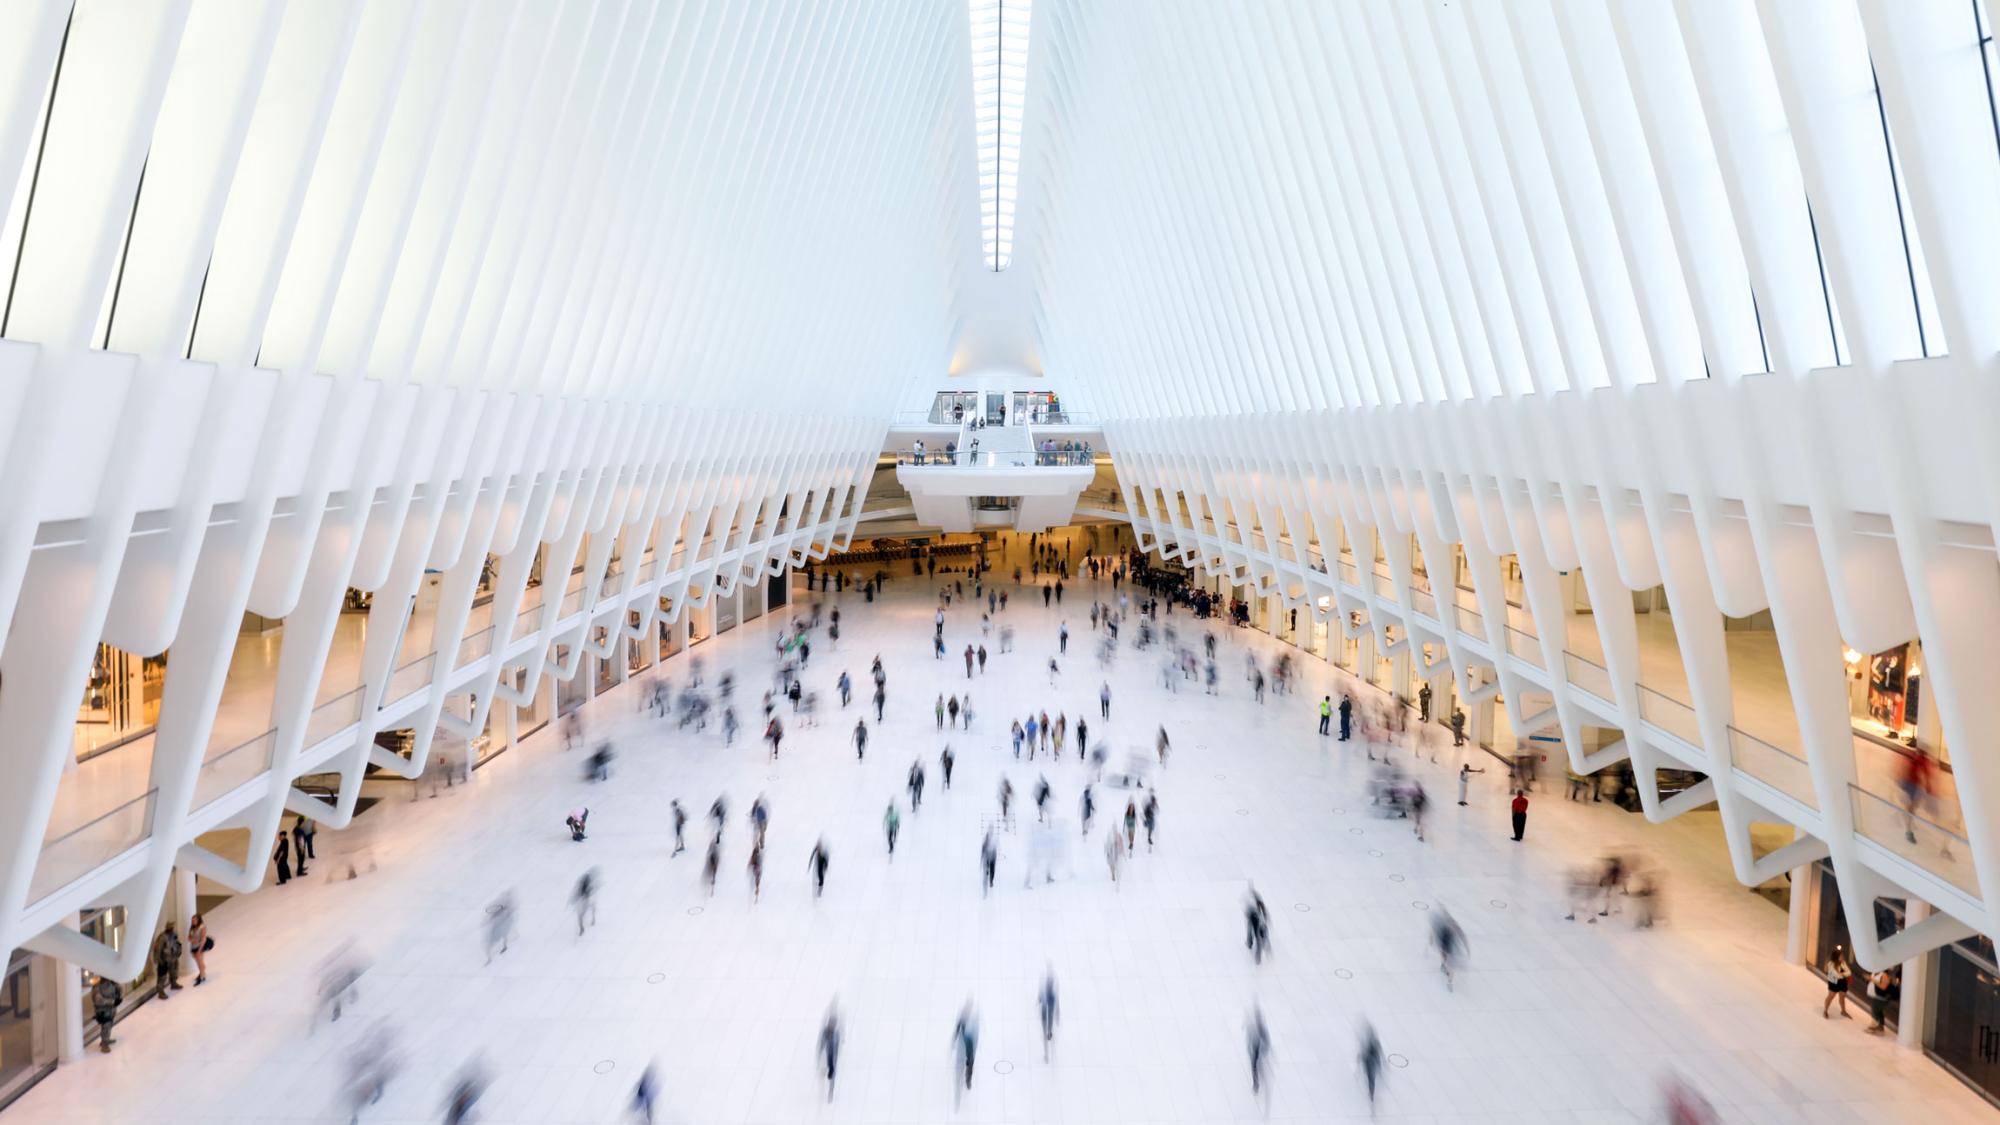 The Oculus transit hub at the World Trade Center